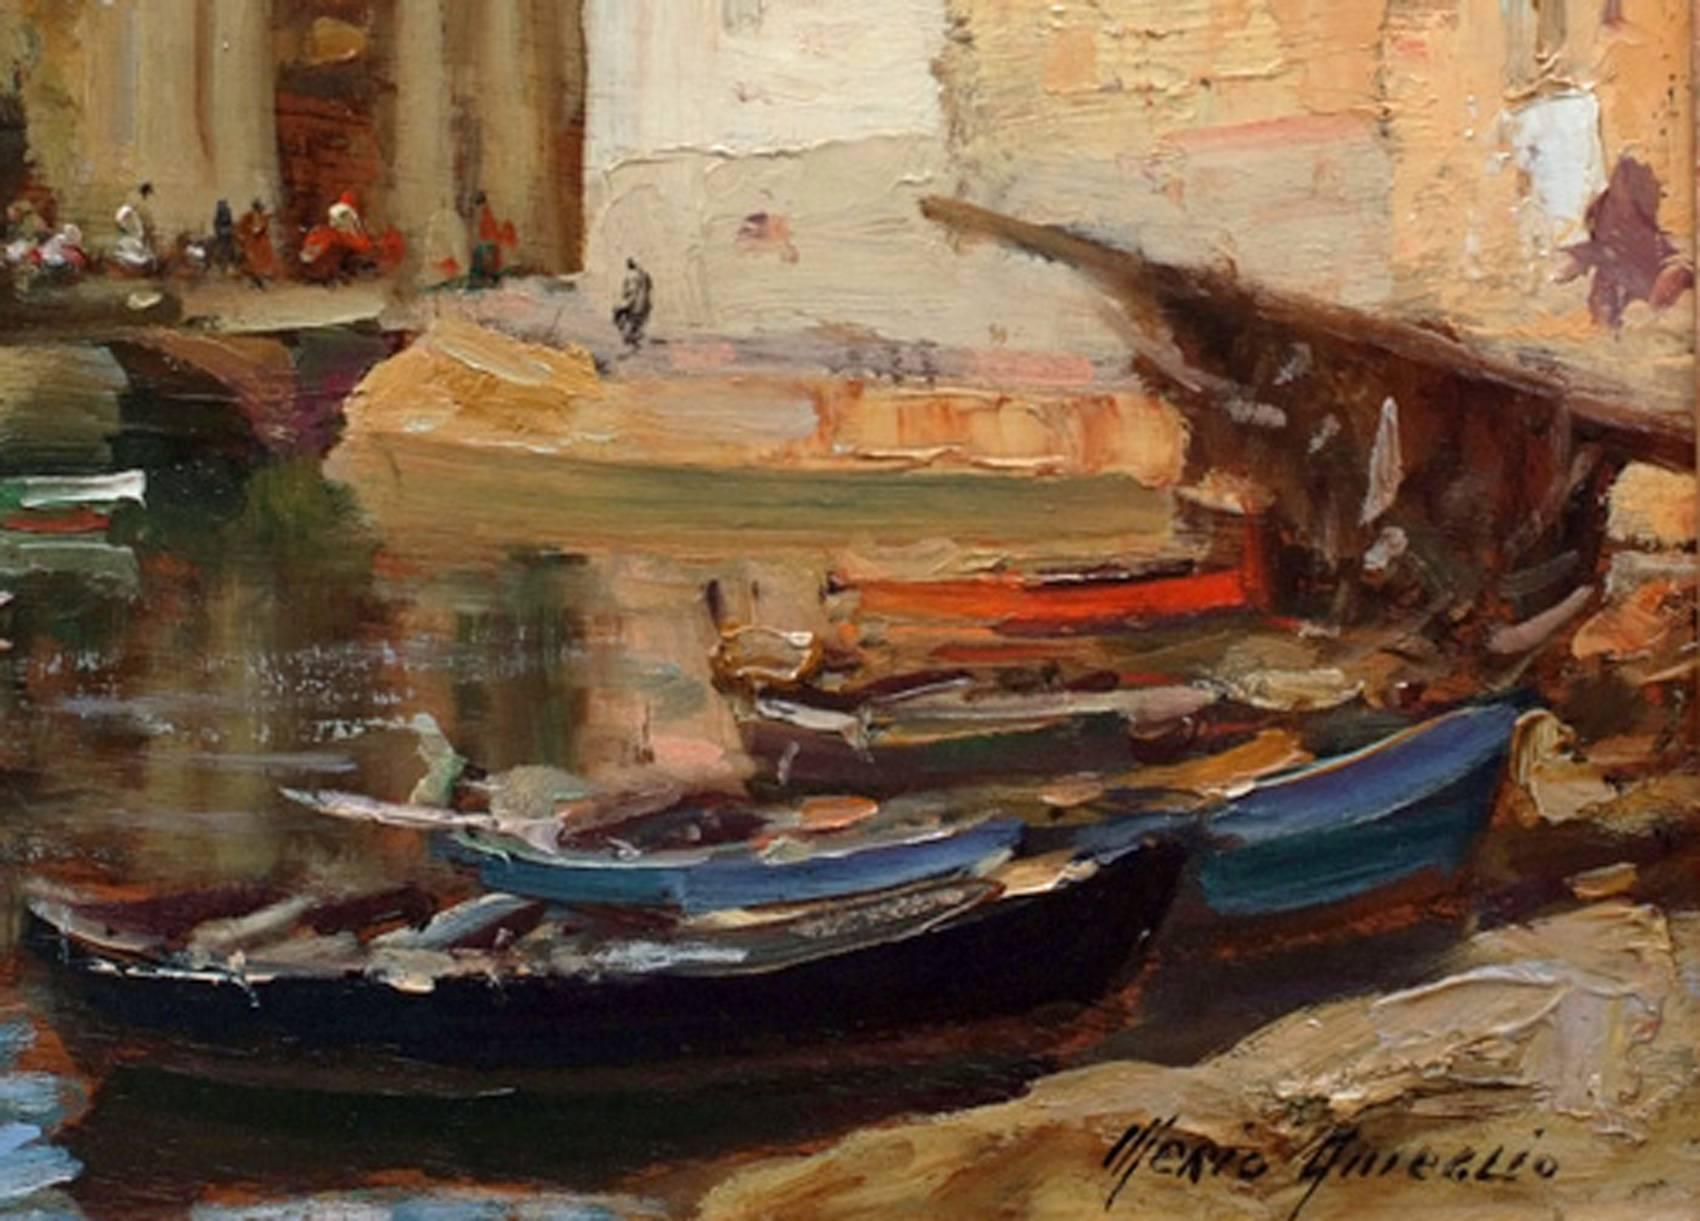 Merio AMEGLIO (1897-1970) Peinture - Marine - Côte d'Azur française - Port de Martigues - Painting de Merio Ameglio